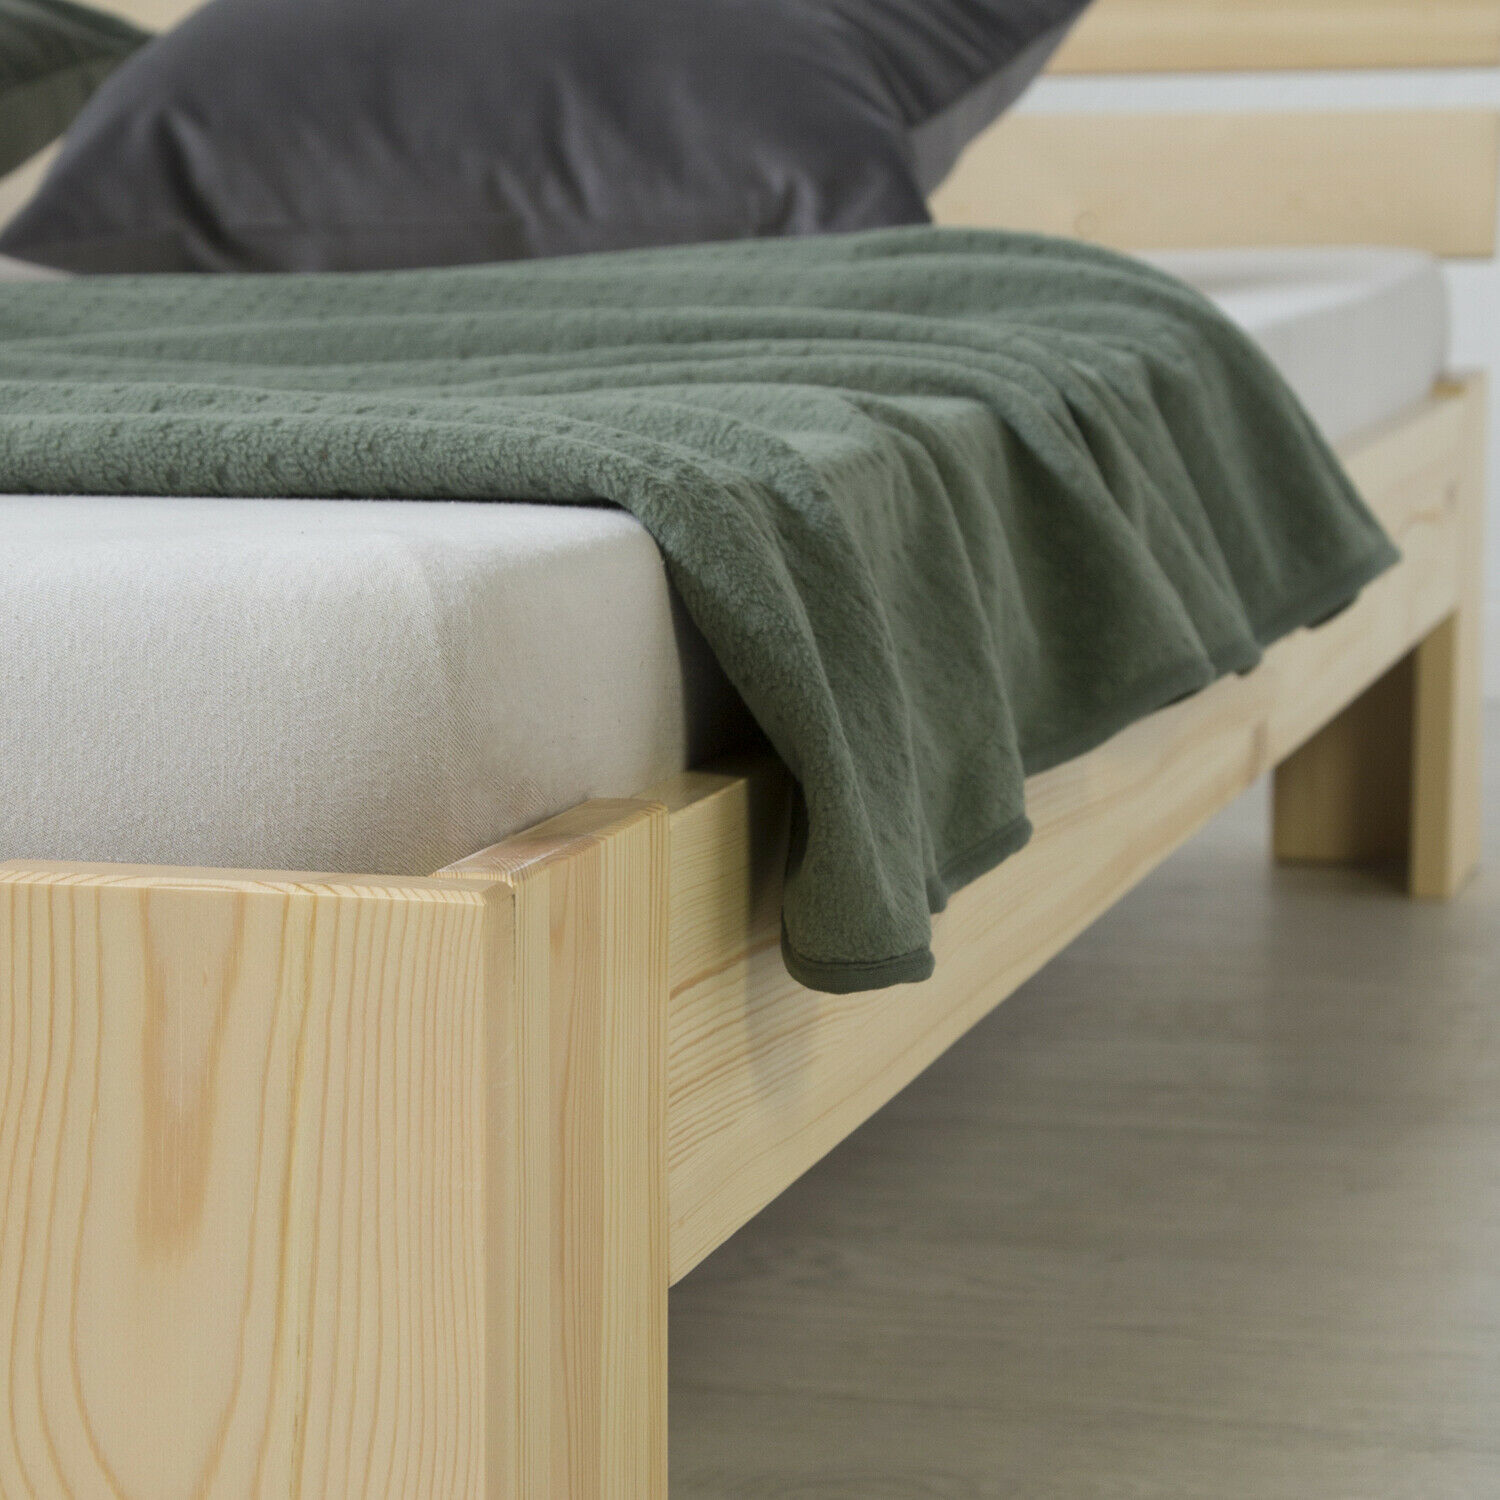 Double bed woodbed futonbett 180x200 light